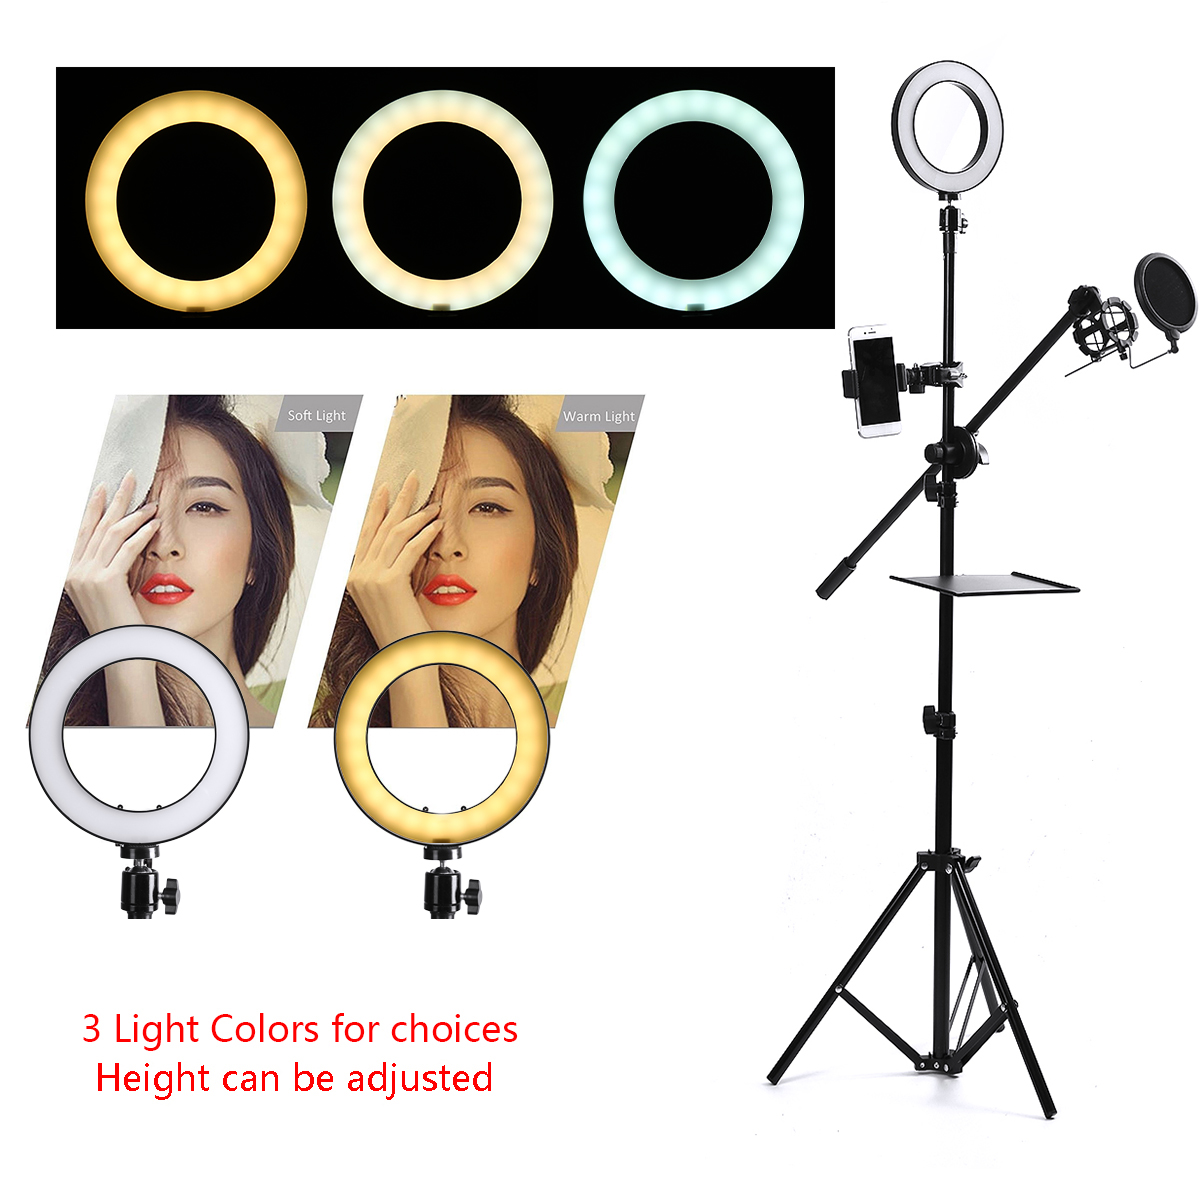 Ca Live Stream Makeup Selfie Ring Light 16/25cm LED Video Ring Light Tripod Stand for Youtube Tik Tok Live Streaming with Phone/Mic Holder bluetooth Selfie Shutter for Selfie Vlog YouTube